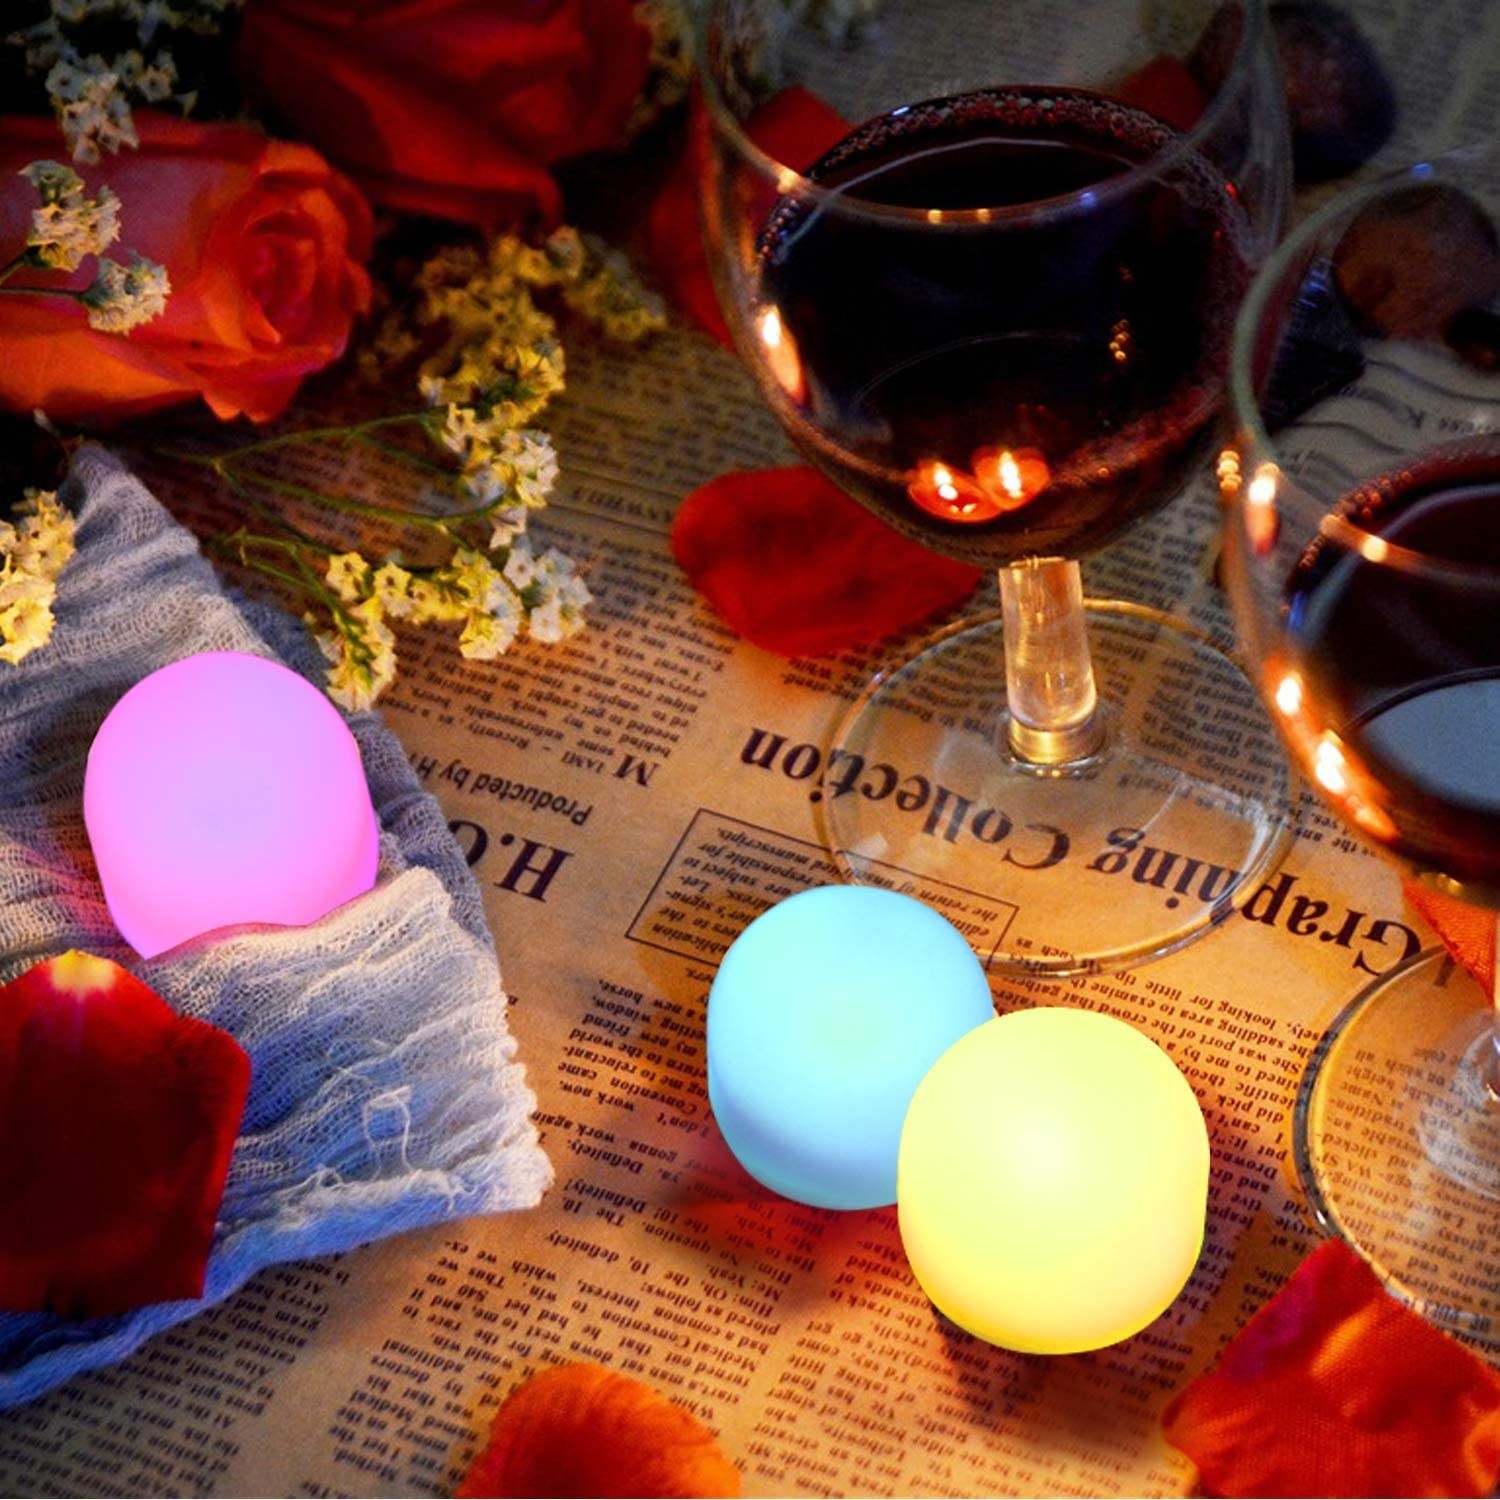 Three colourful nightlights illuminate a newspaper and wine glasses